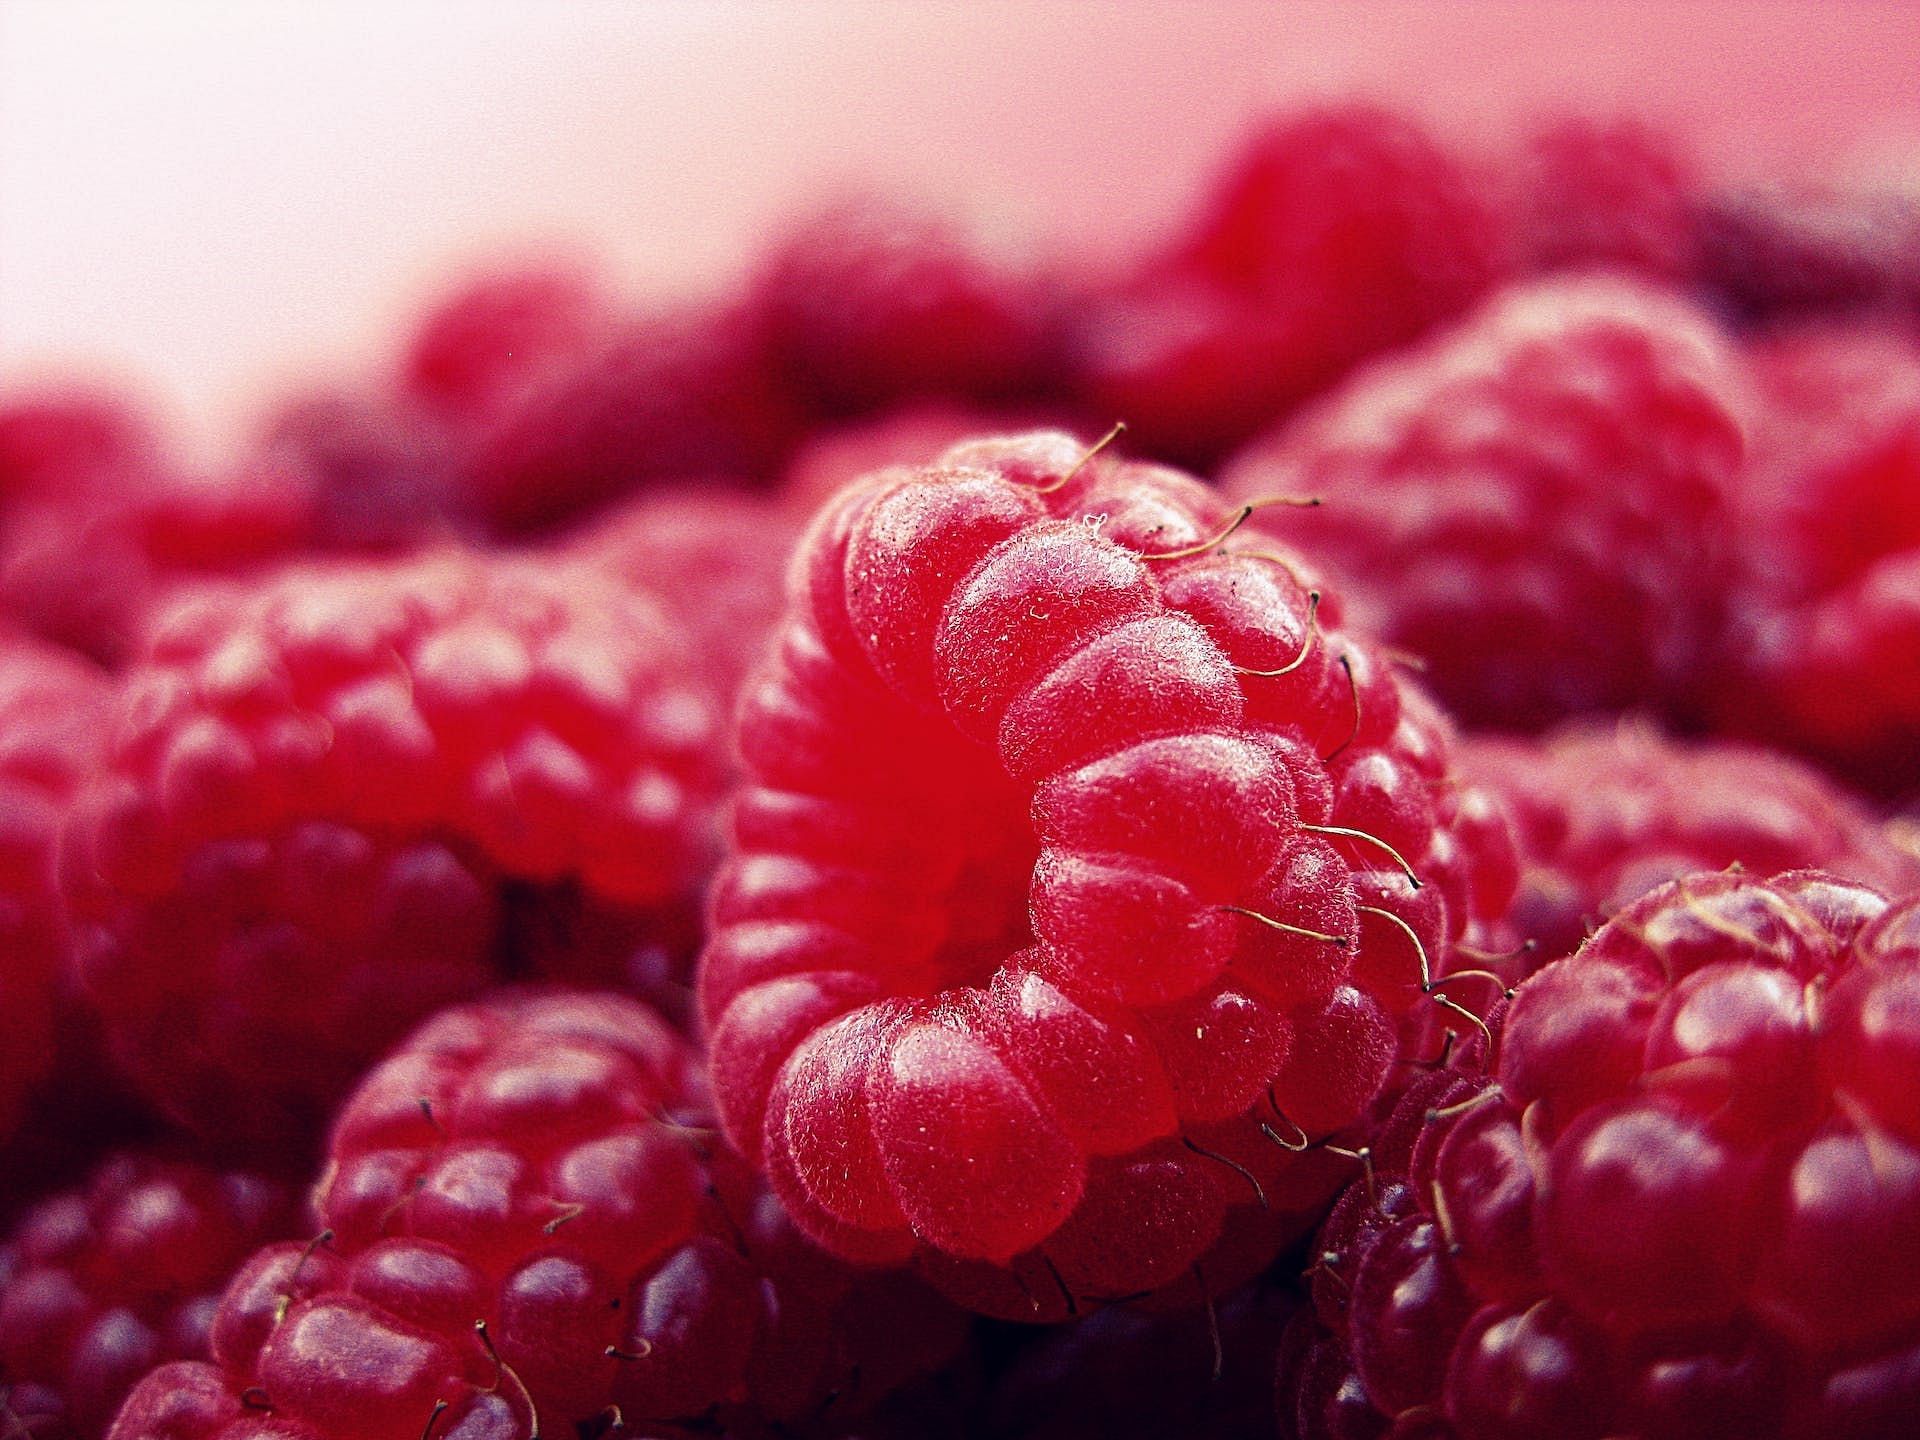 Raspberries (Image via Pexels/Pixabay)